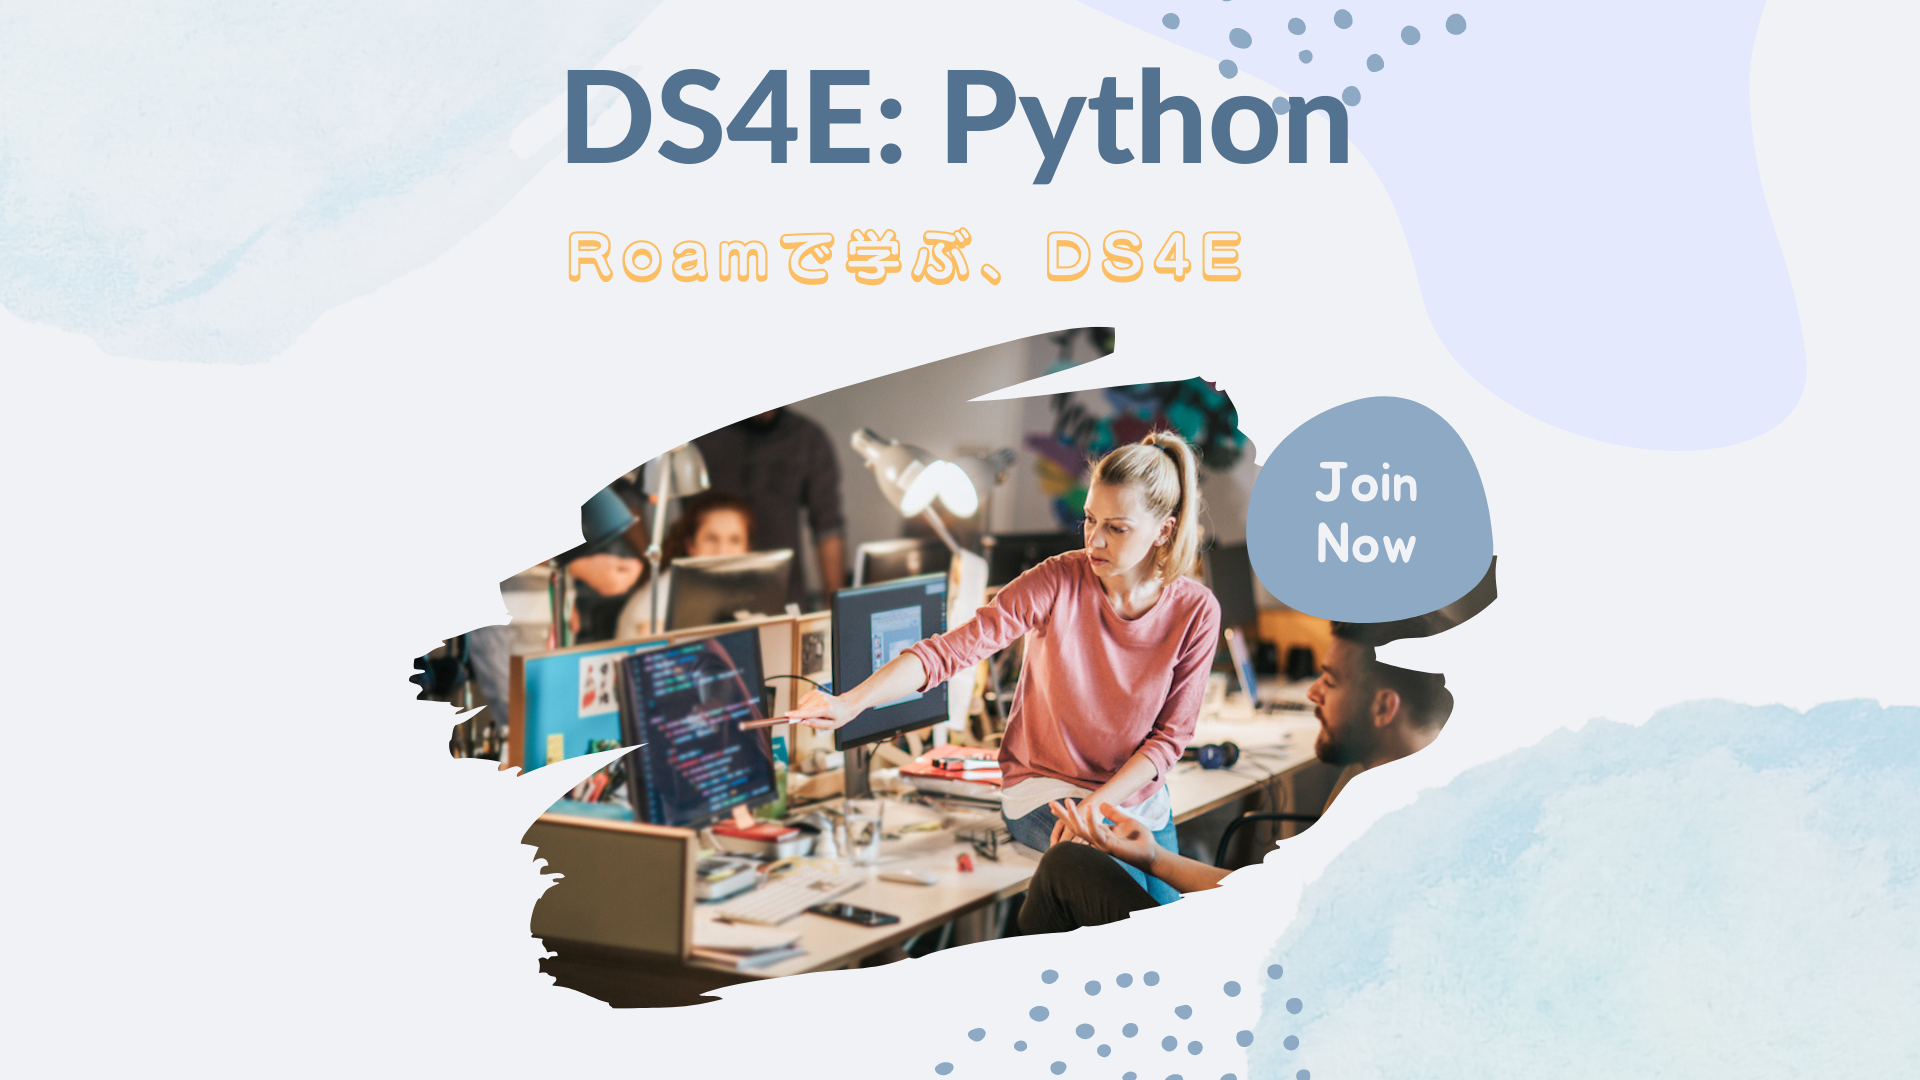 Roamで学ぶ、DS4E: Python（年間契約なし）